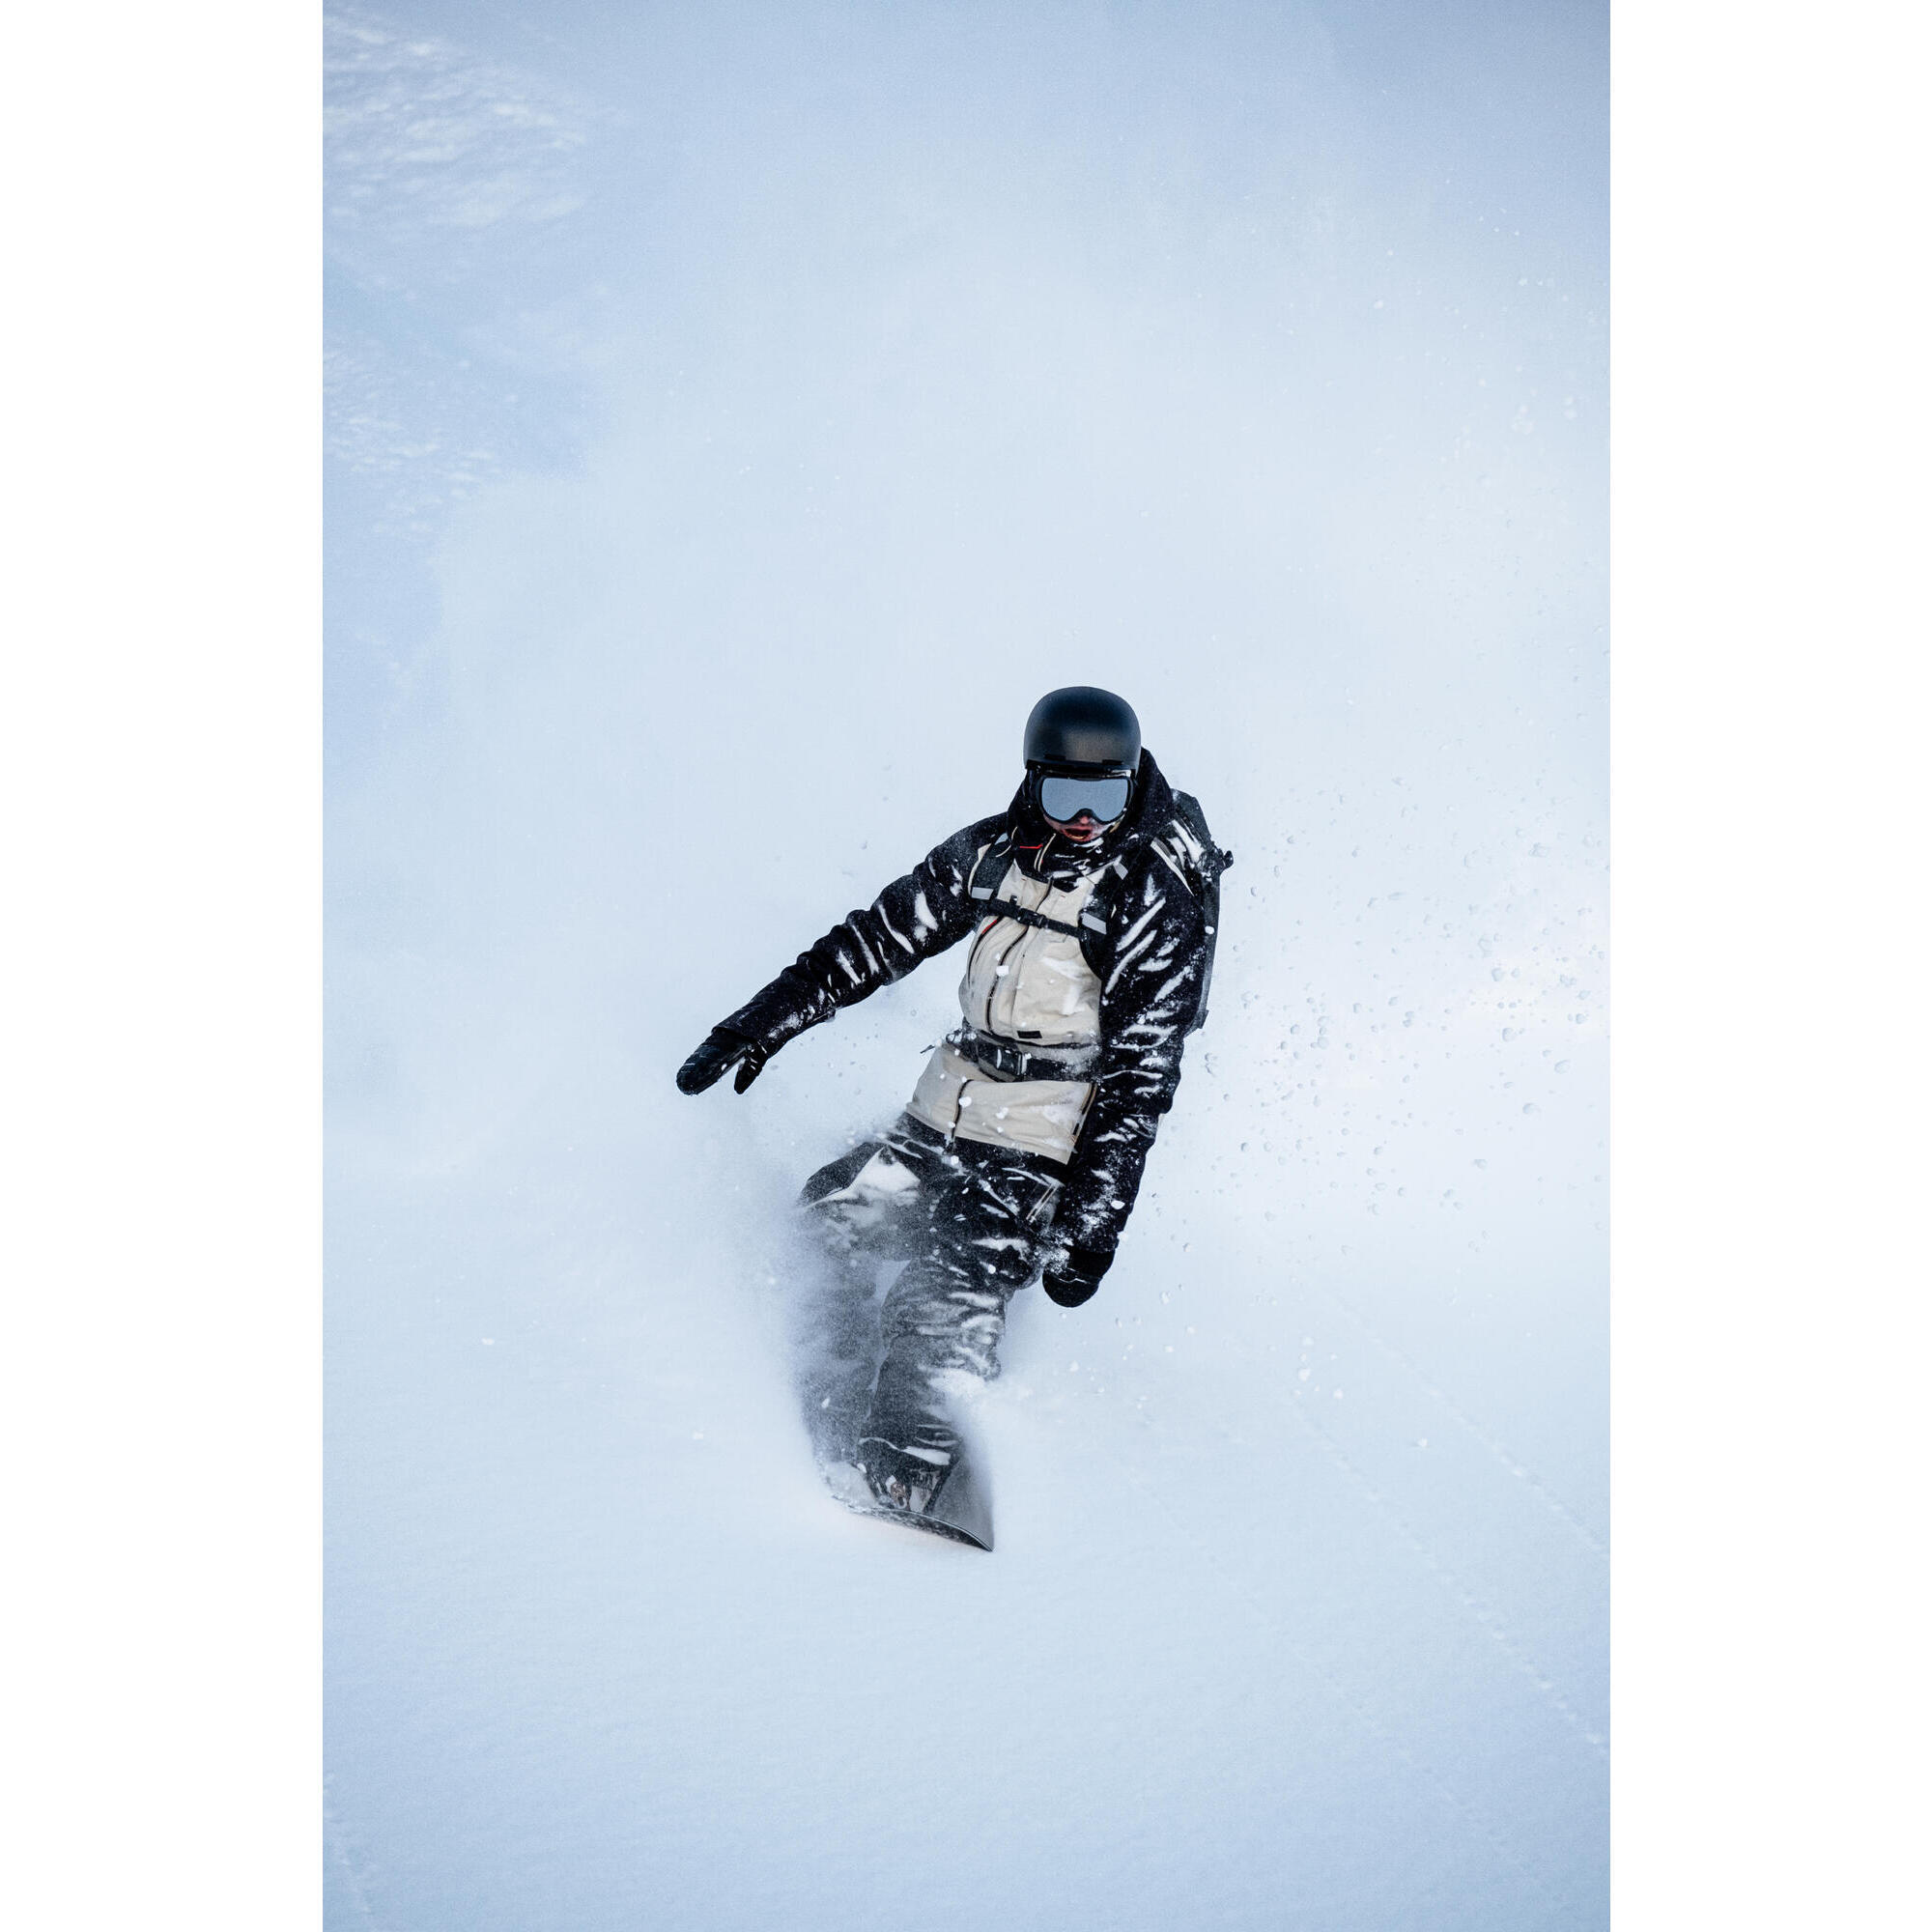 Men's Winter Bib Pants – SNB 900 Black - Black, Sand - Dreamscape